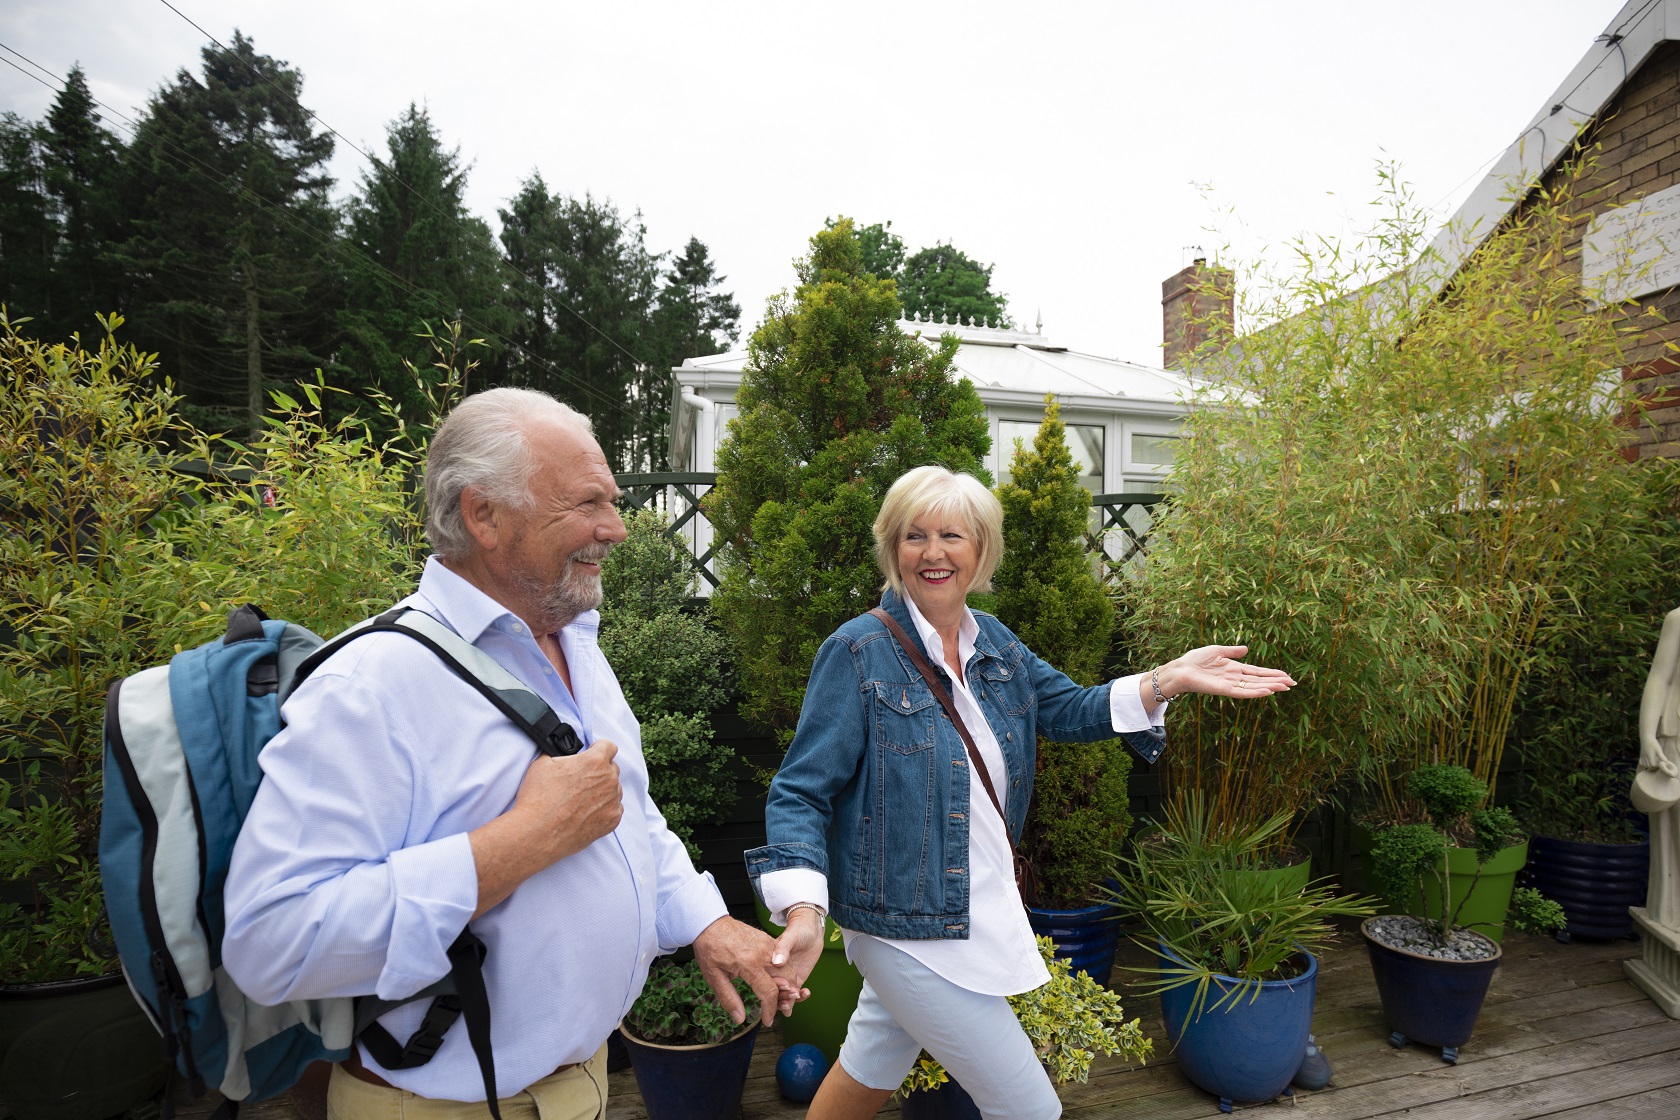 Elderly couple walking in garden